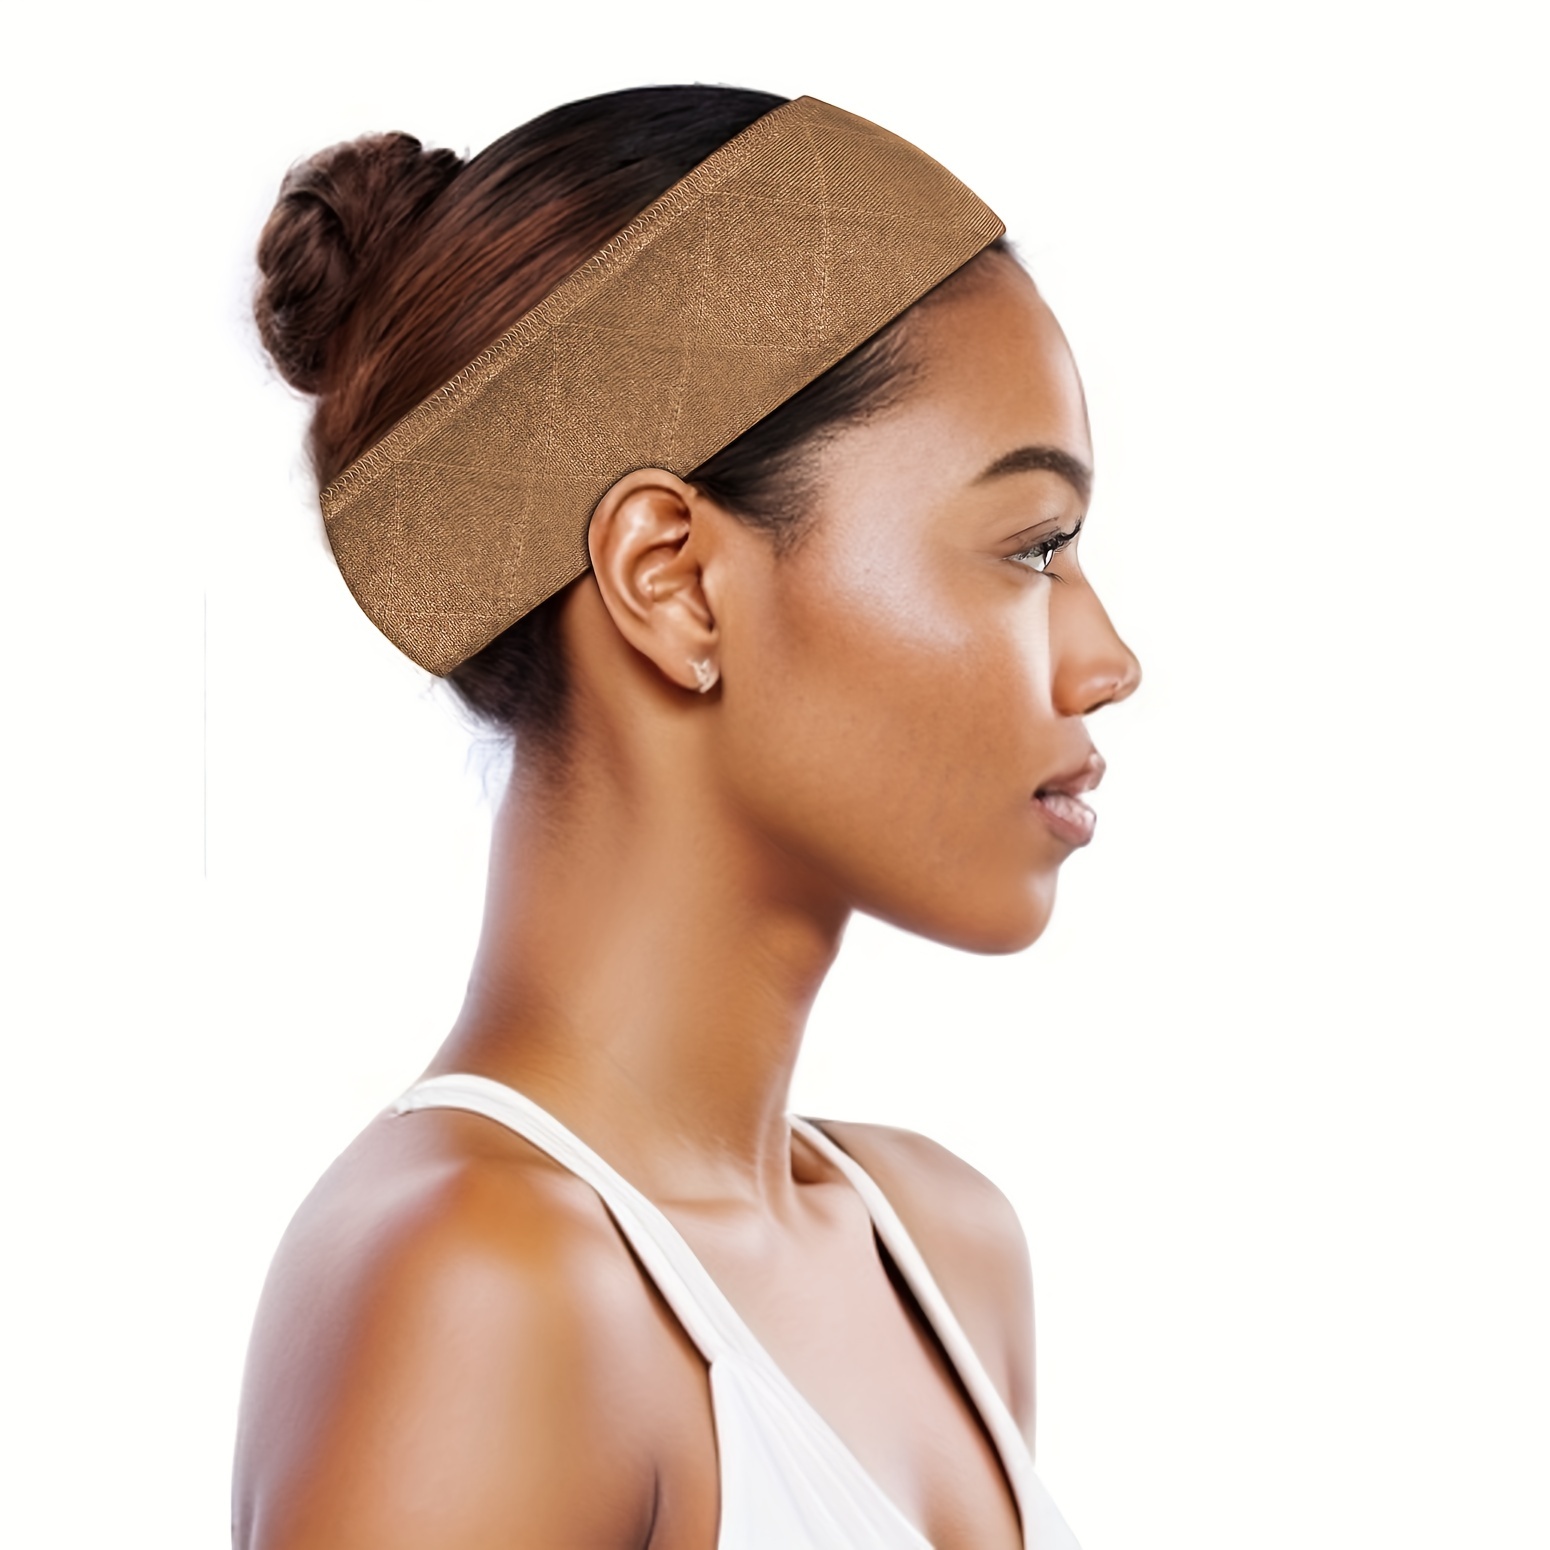 2pcs No-slip Wig Grip Band Transparent Silicone Wig Band Comfort Head Hair  Headband Adjustable Women Hair Wig Band (white)